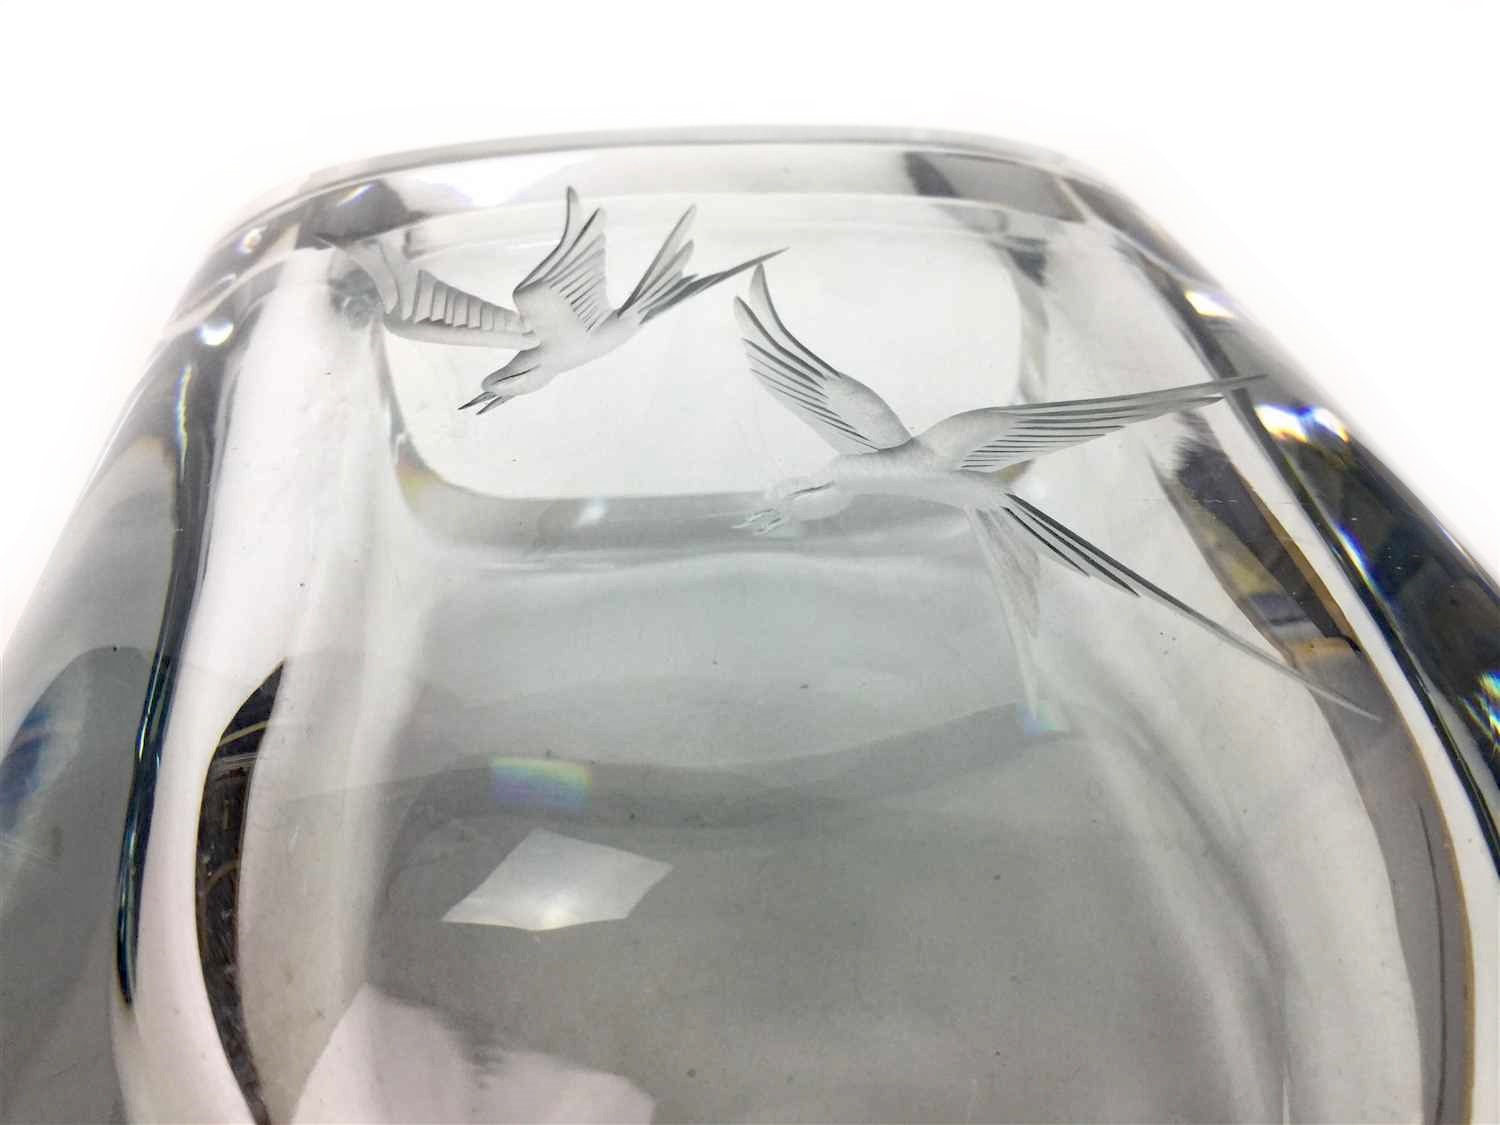 A STROMBERG GLASS VASE - Image 2 of 2